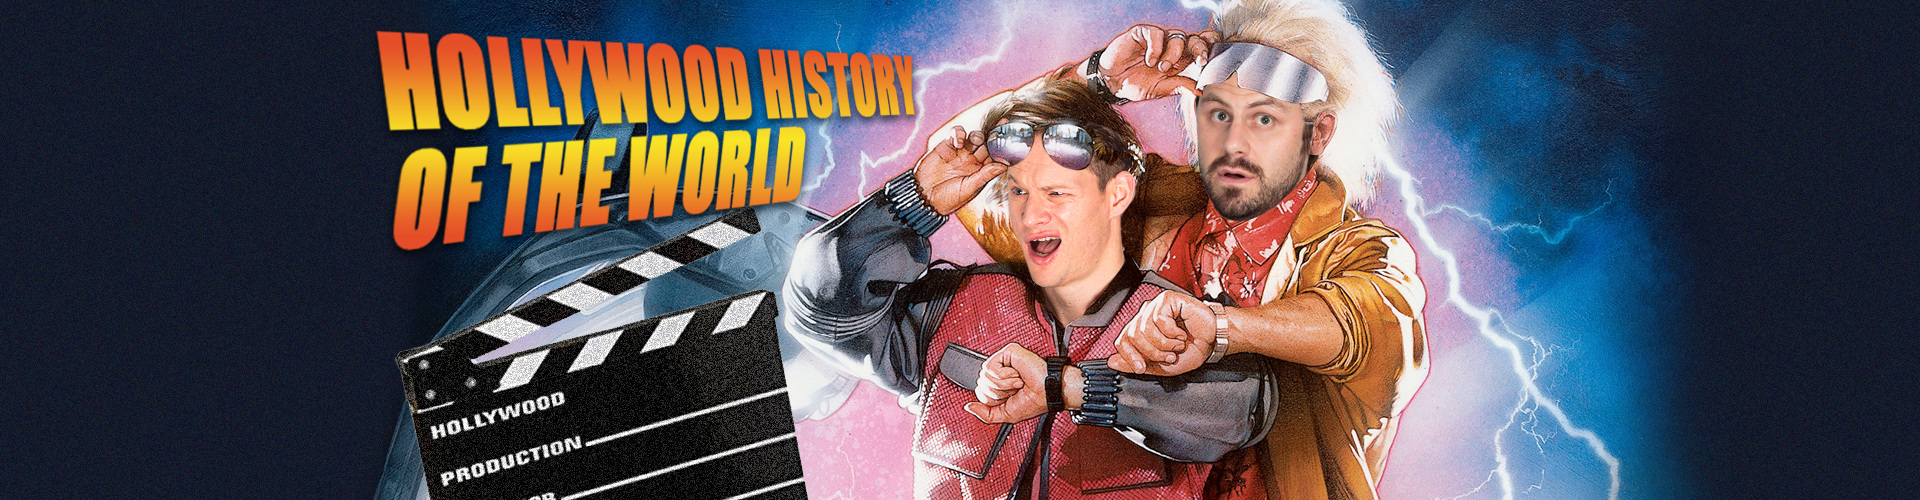 Hollywood History of the World header image